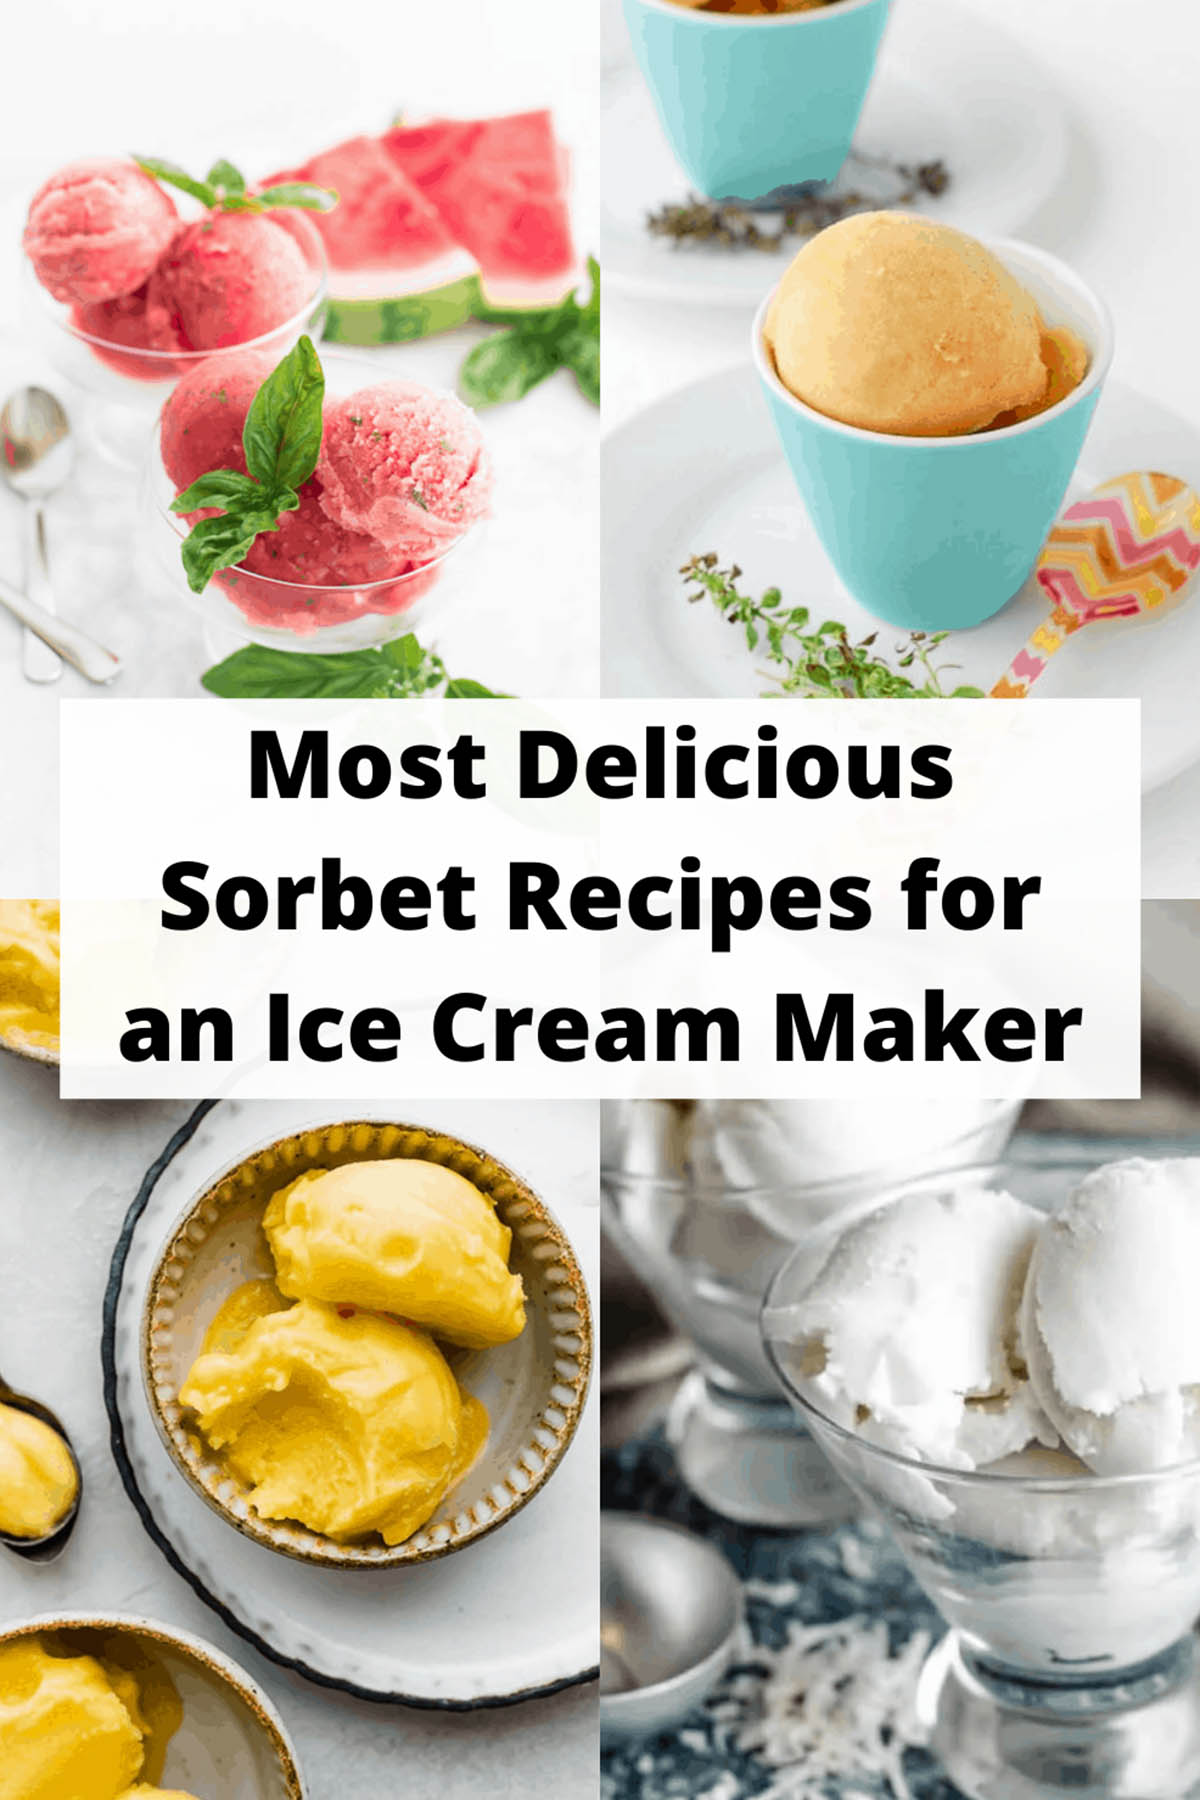 https://homebodyeats.com/wp-content/uploads/2022/02/cuisinart-ice-cream-maker-sorbet.jpg